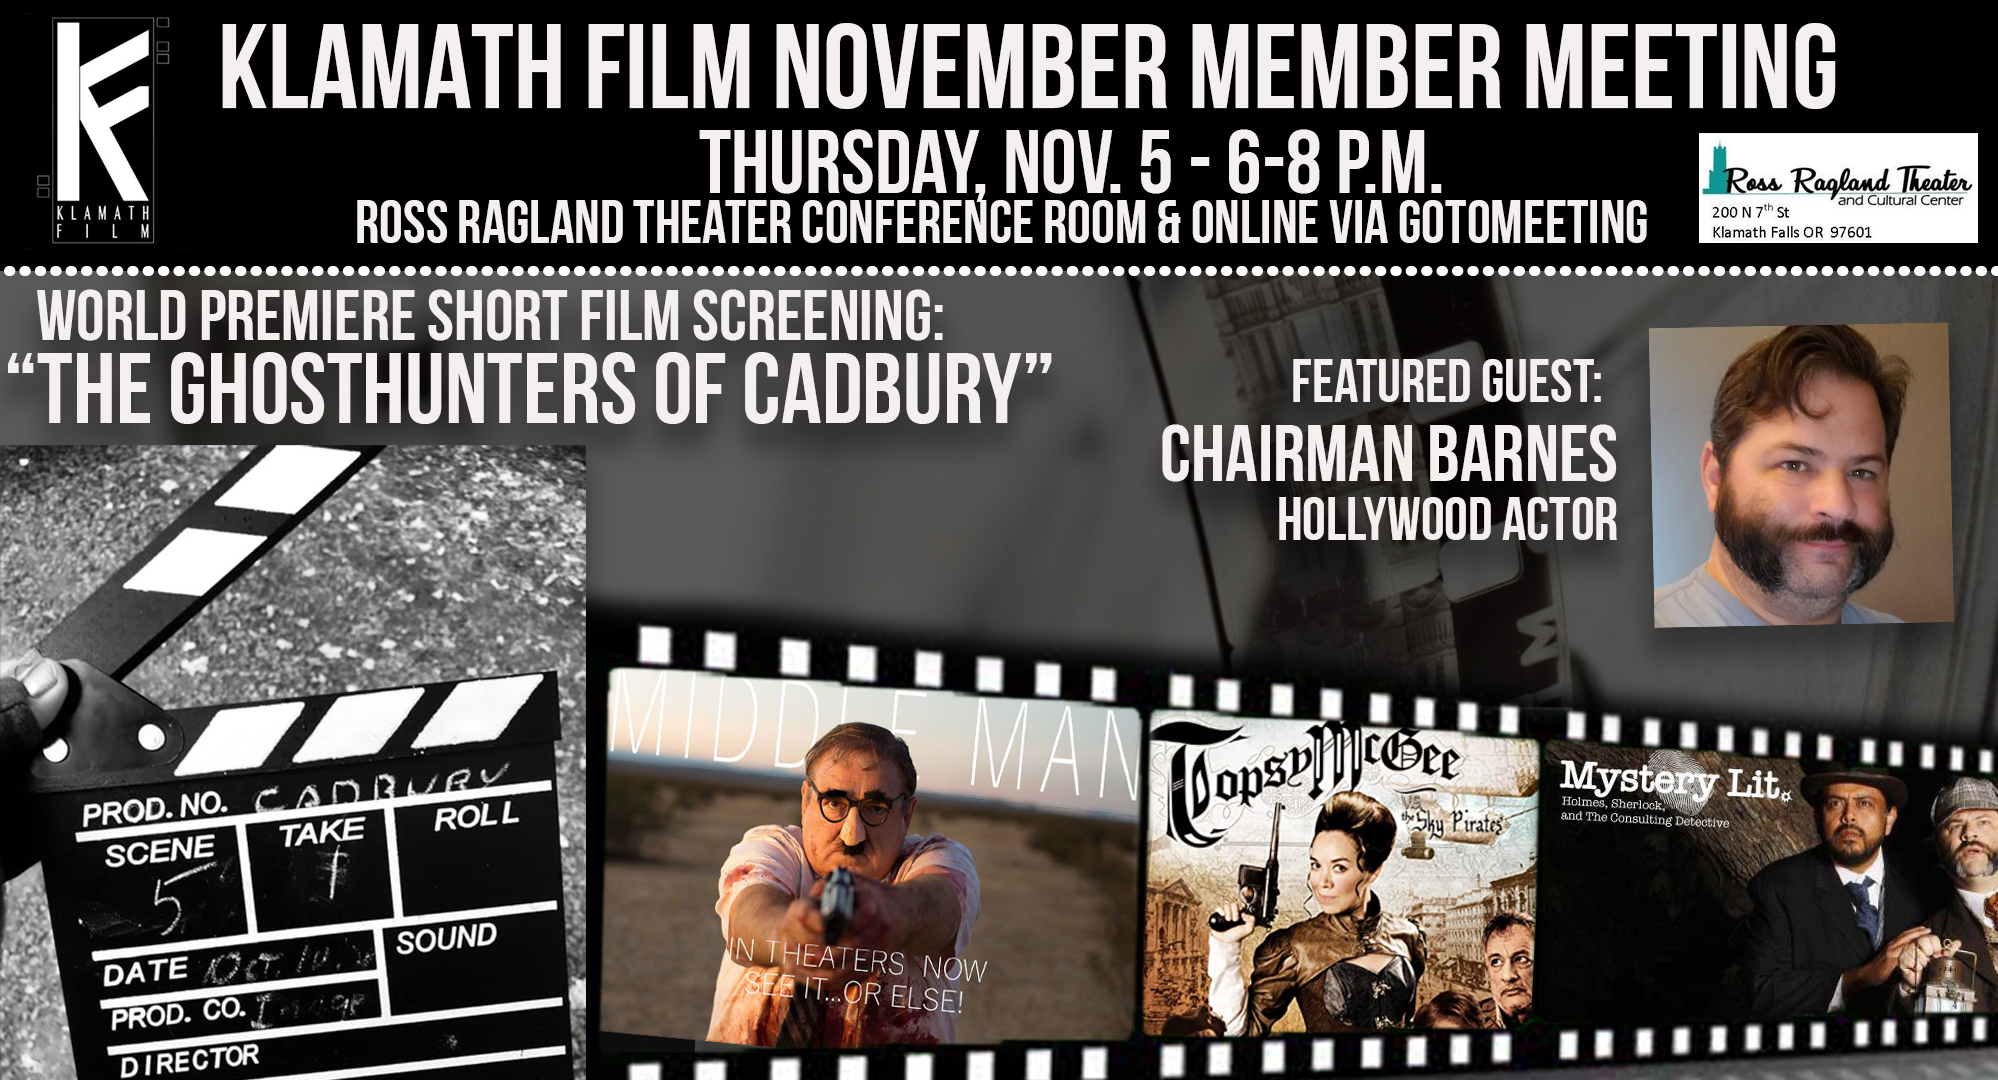 Hollywood actor Chairman Barnes guest at November Klamath Film meeting